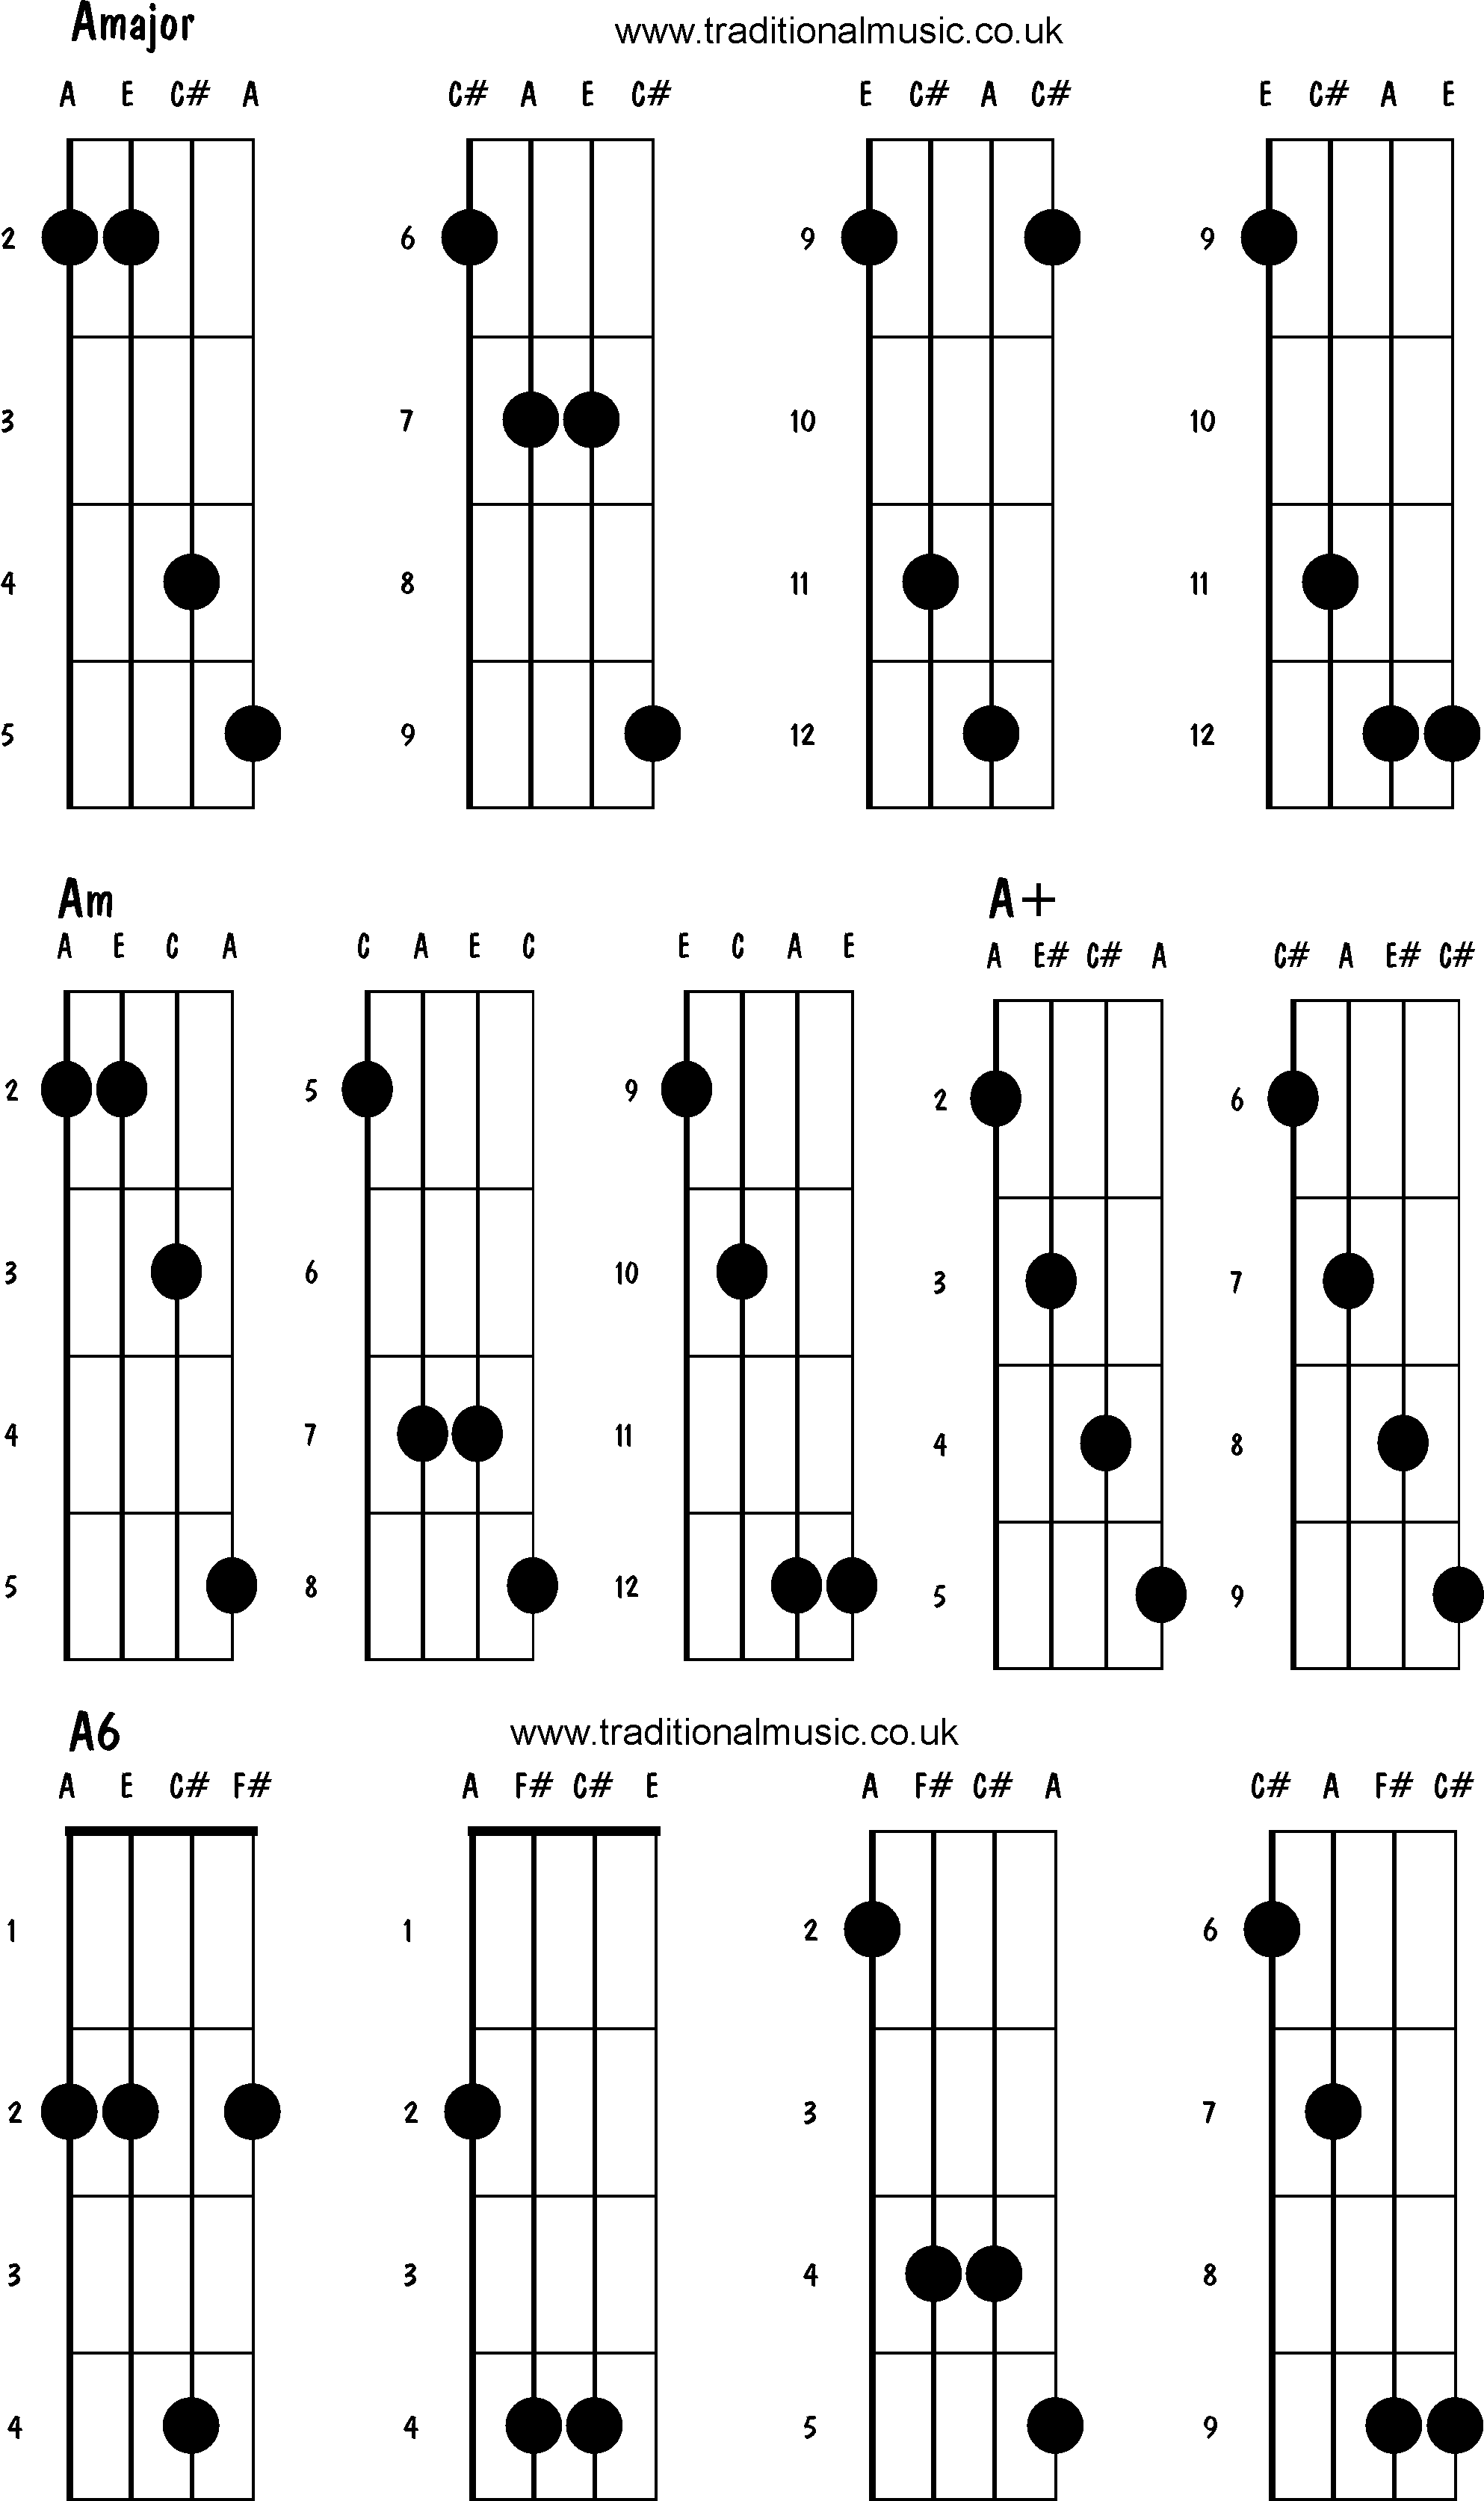 Advanced mandolin chords:Amajor, Am, A+, A6